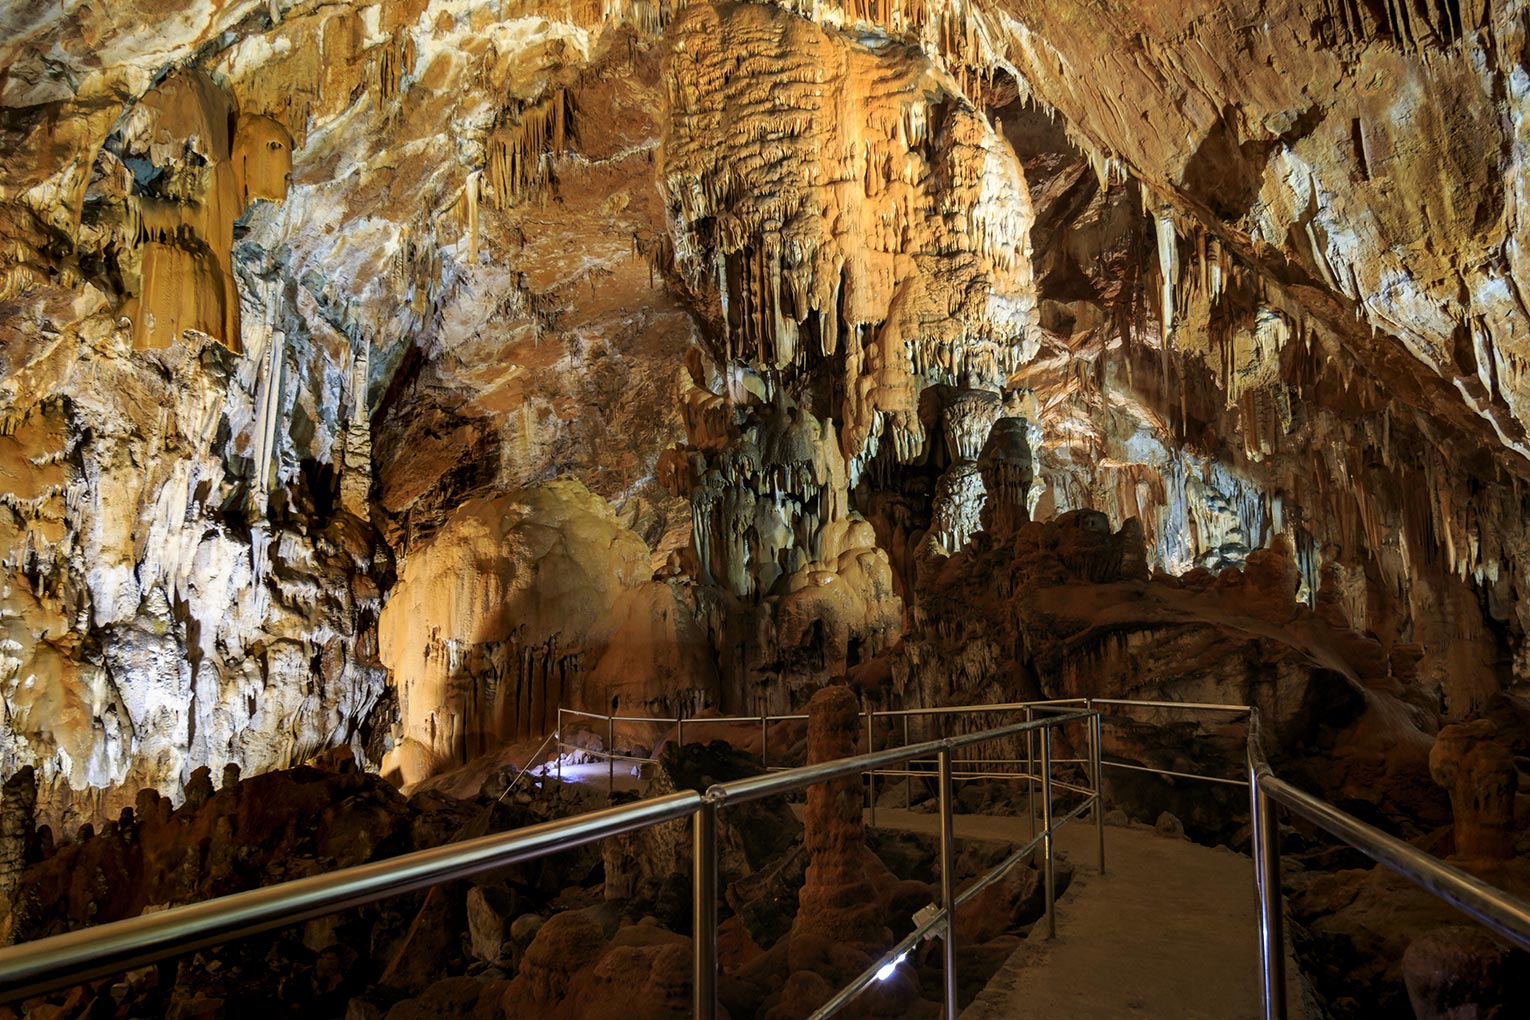 Manita peć cave in Paklenica National Park